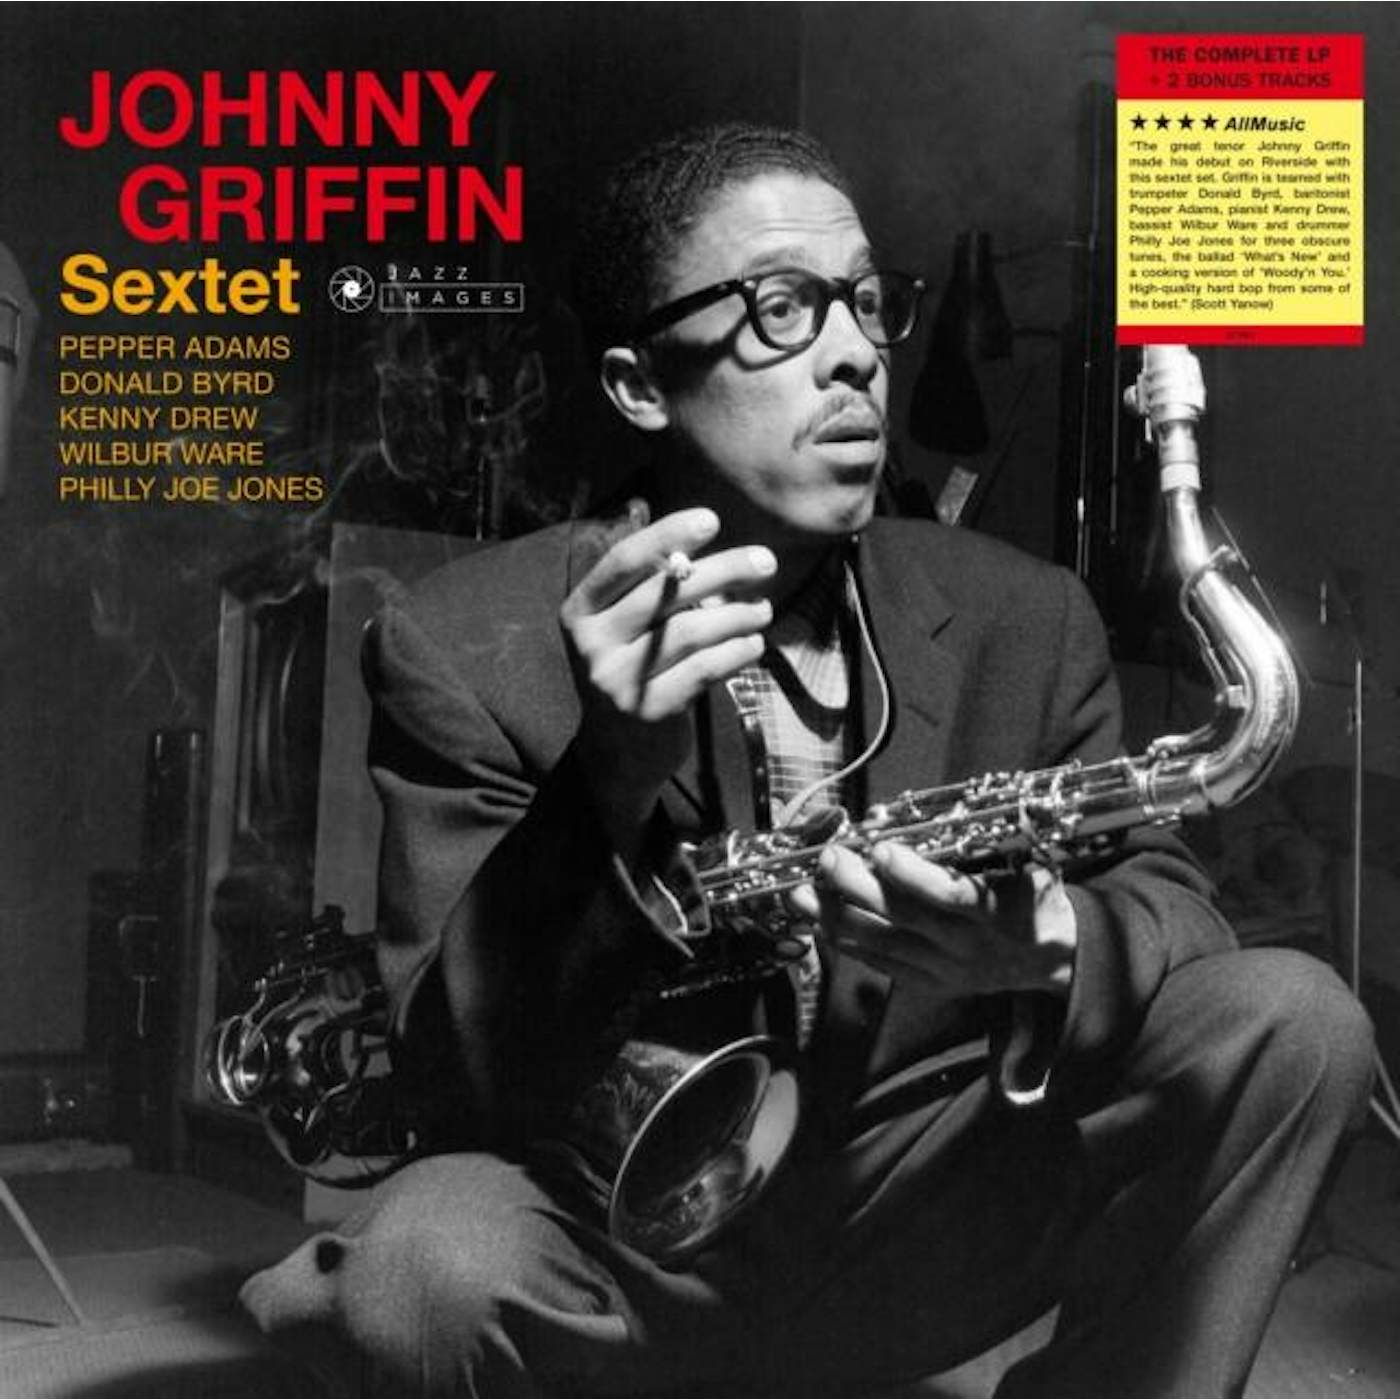 Johnny Griffin LP Vinyl Record - Johnny Griffin Sextet